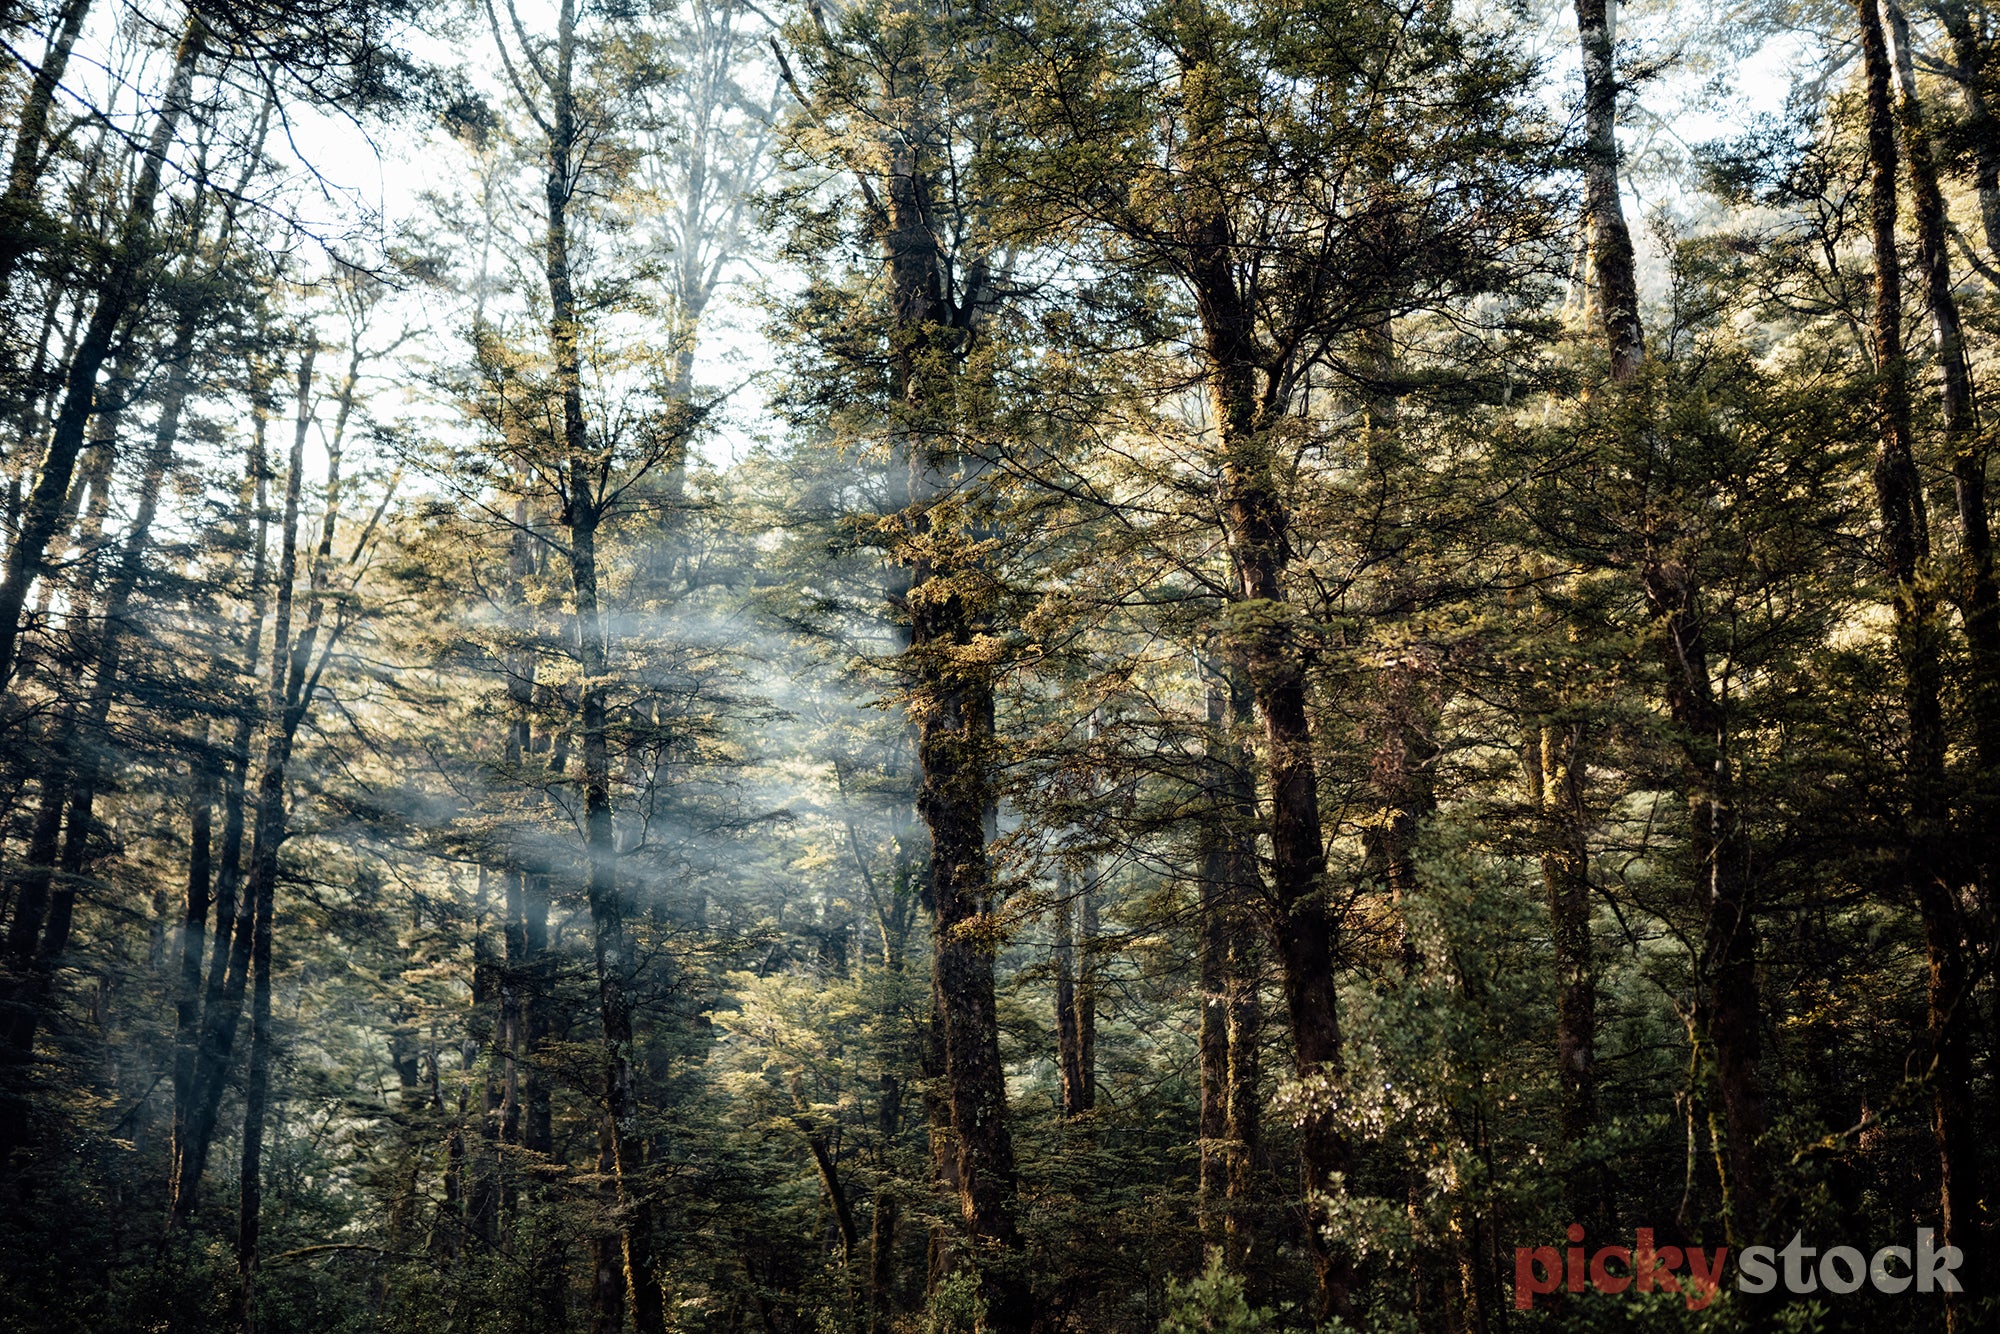 Smoke amongst the trees